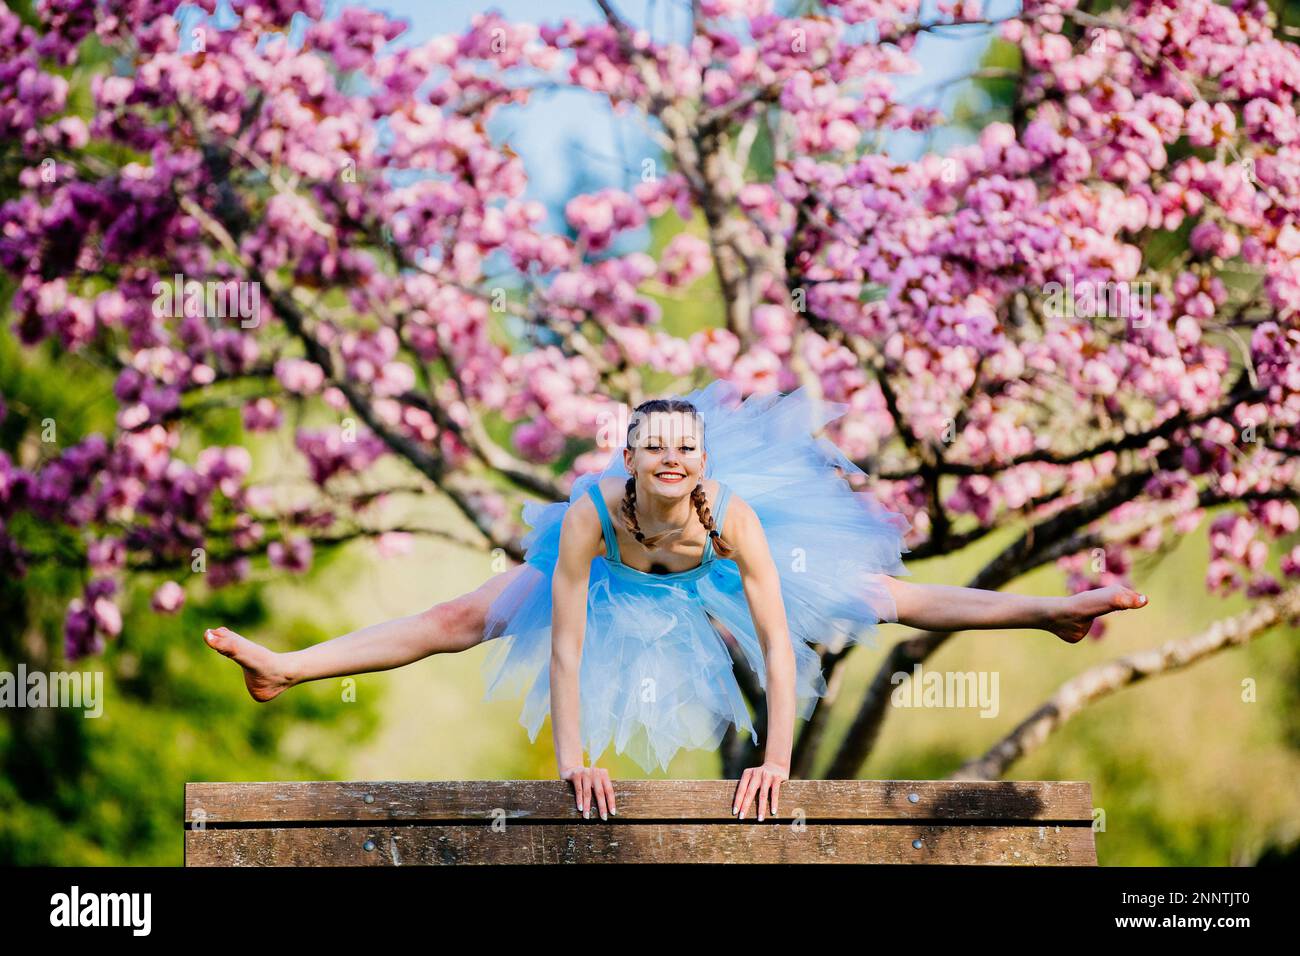 Ballerina in blauem Kleid unter Kirschblüte, Battle Point Park, Bainbridge Island, Washington, USA Stockfoto